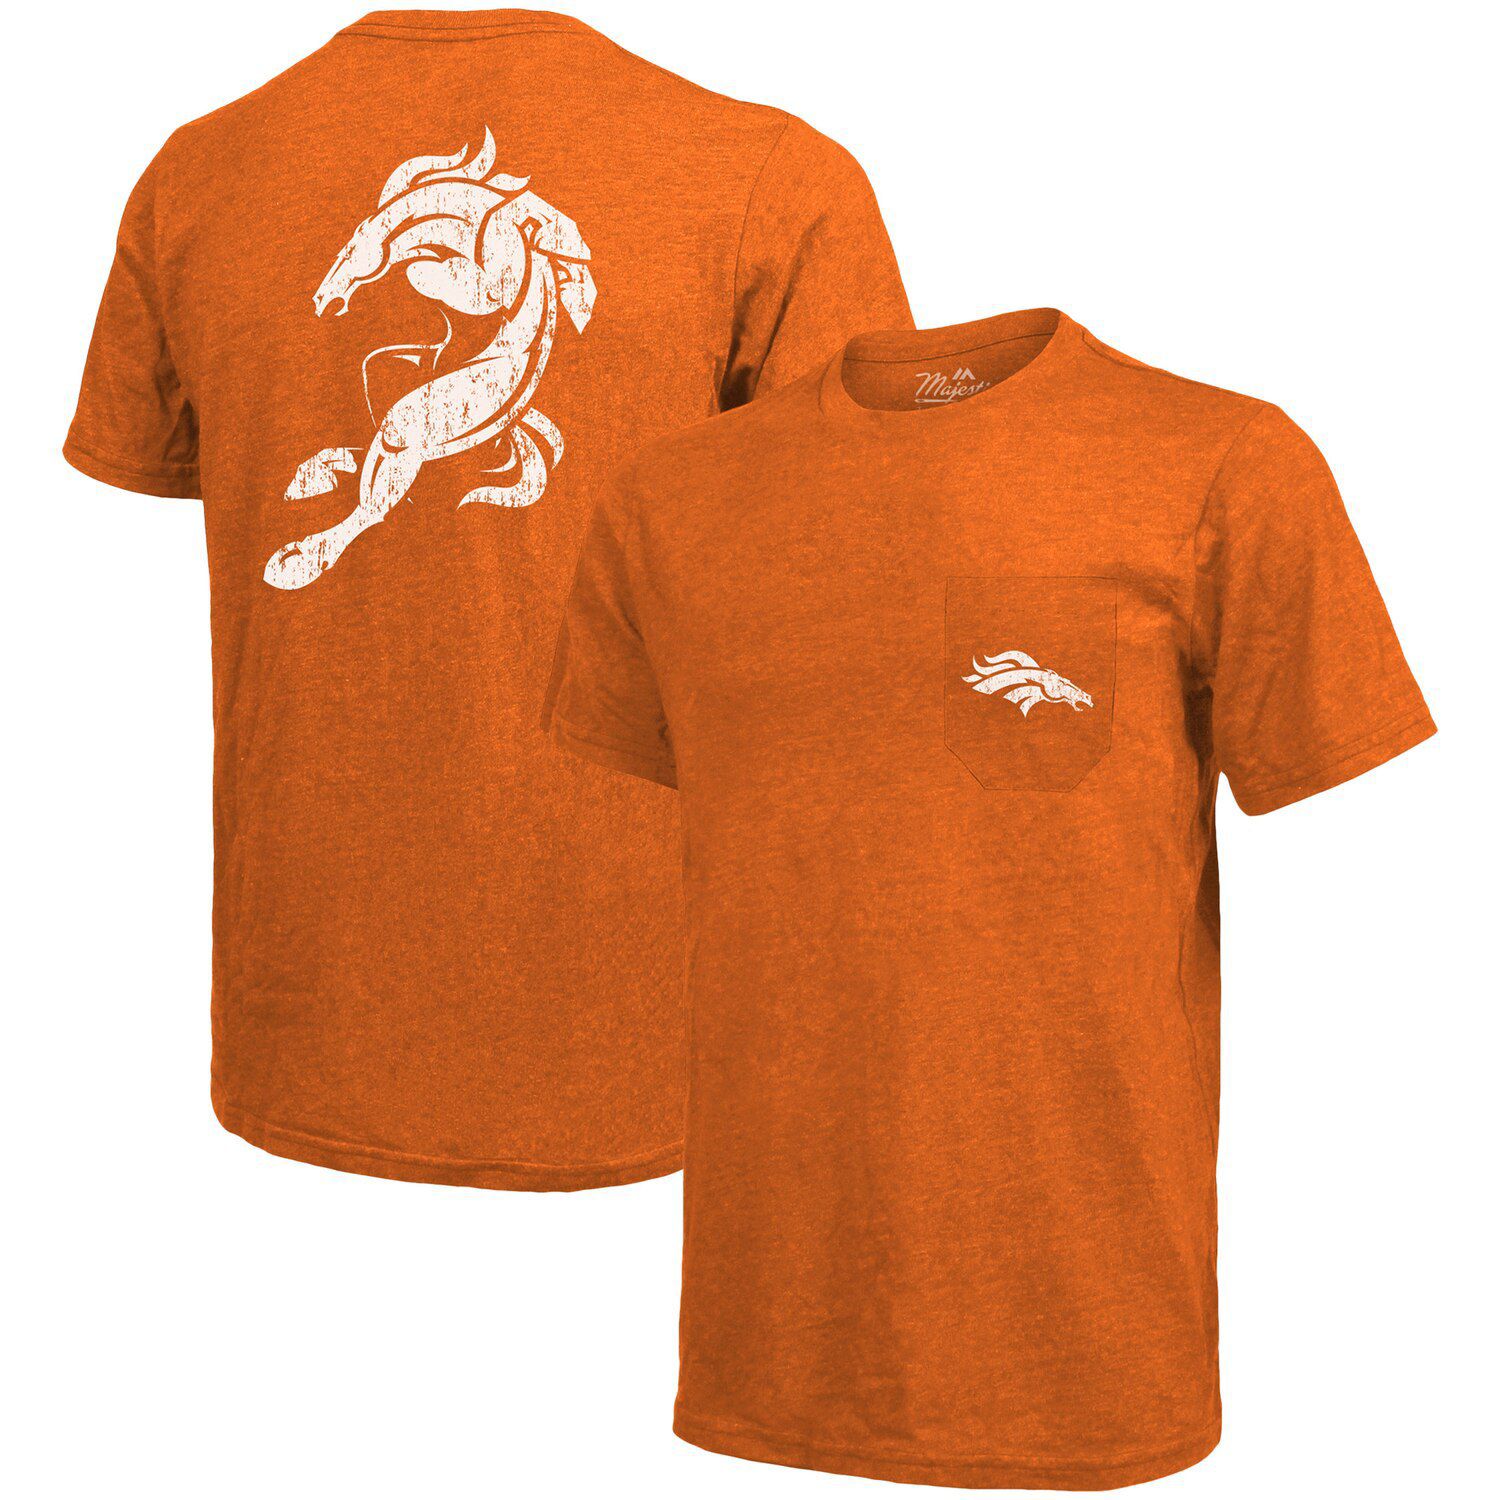 Футболка с карманами Tri-Blend Denver Broncos Majestic Threads - оранжевый футболка с карманами tri blend threads detroit lions синяя majestic